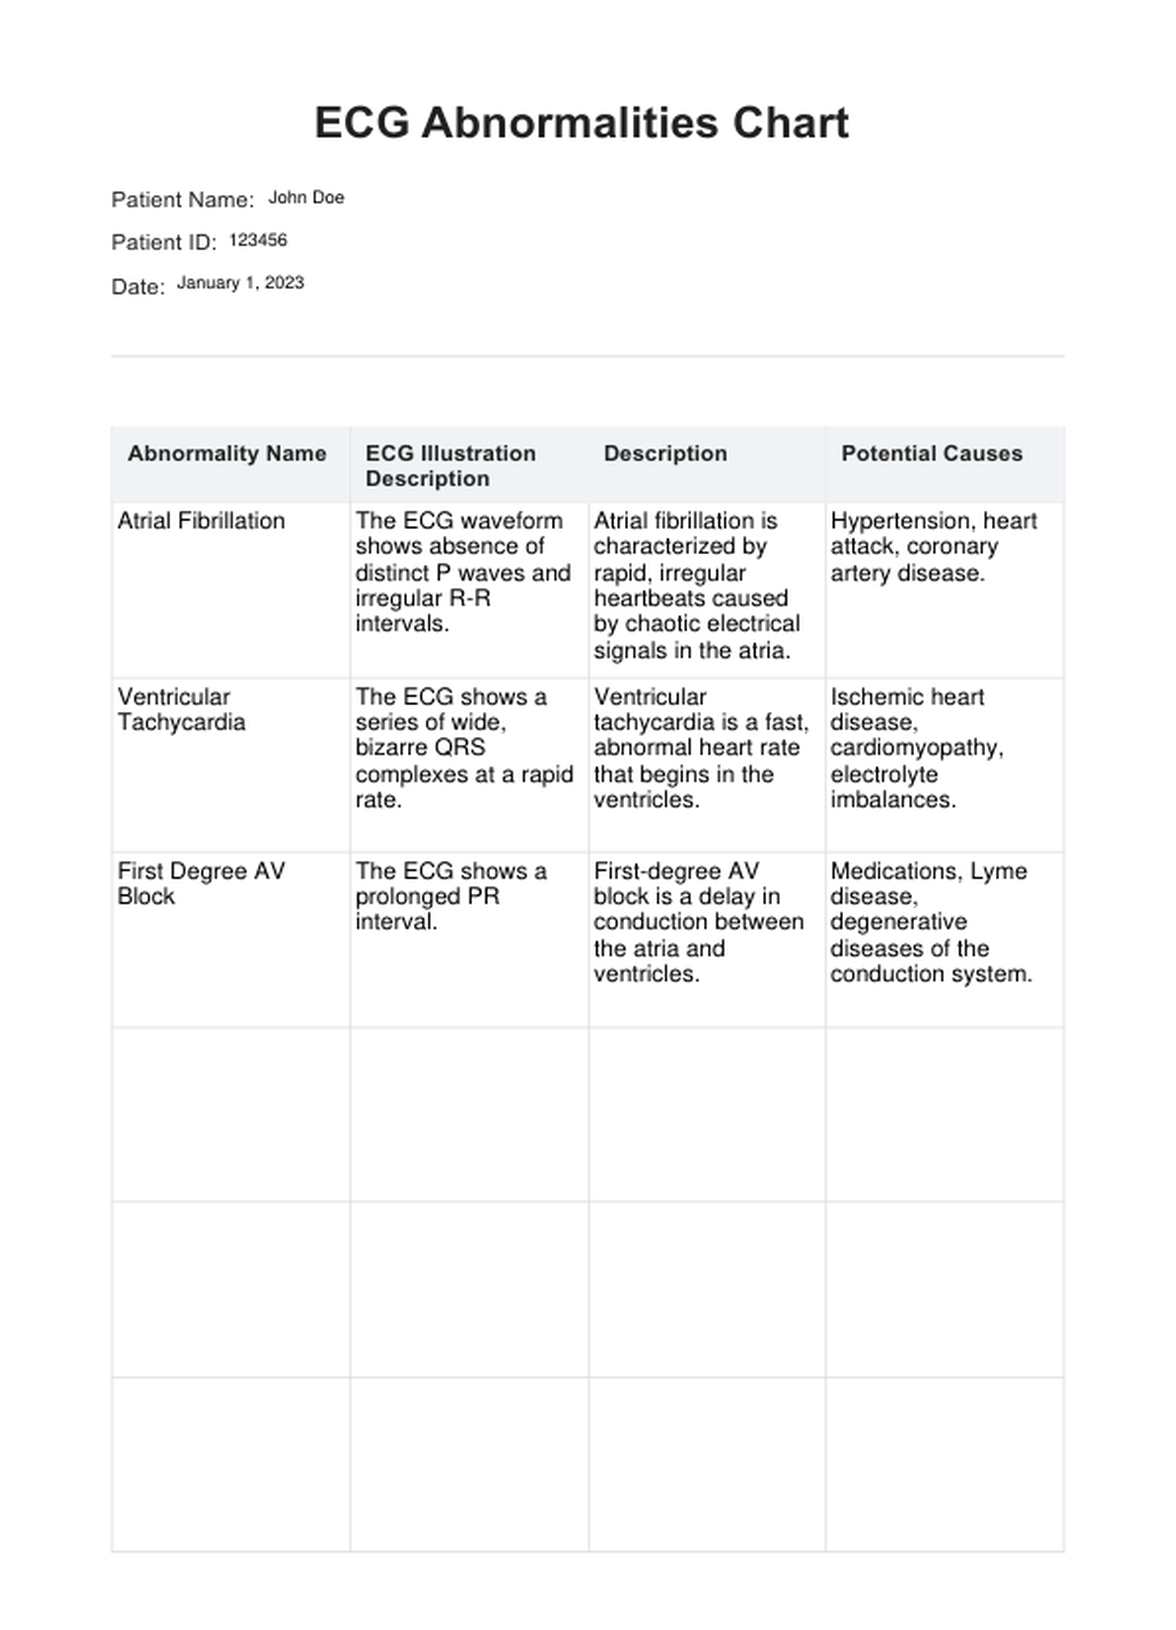 ECG Abnormalities Chart PDF Example